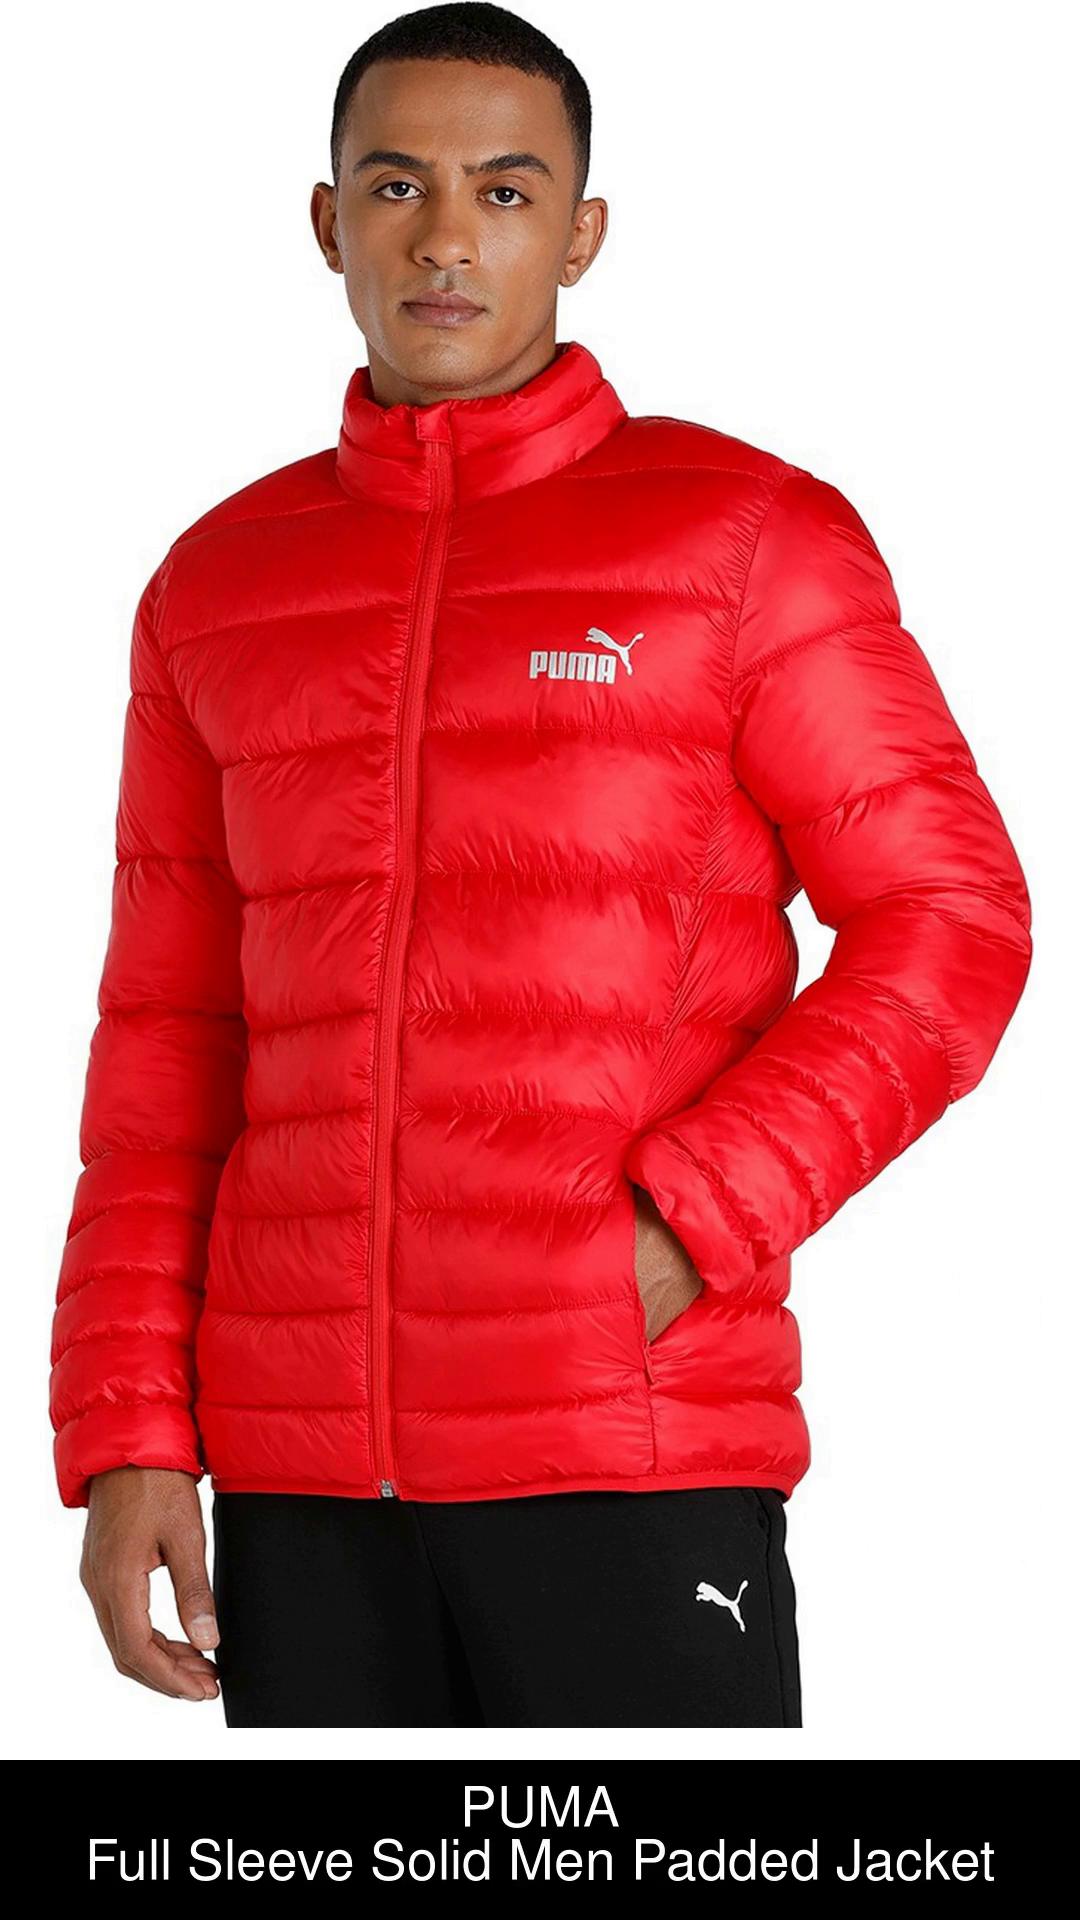 PUMA Full Sleeve Solid Men Jacket - Buy PUMA Full Sleeve Solid Men